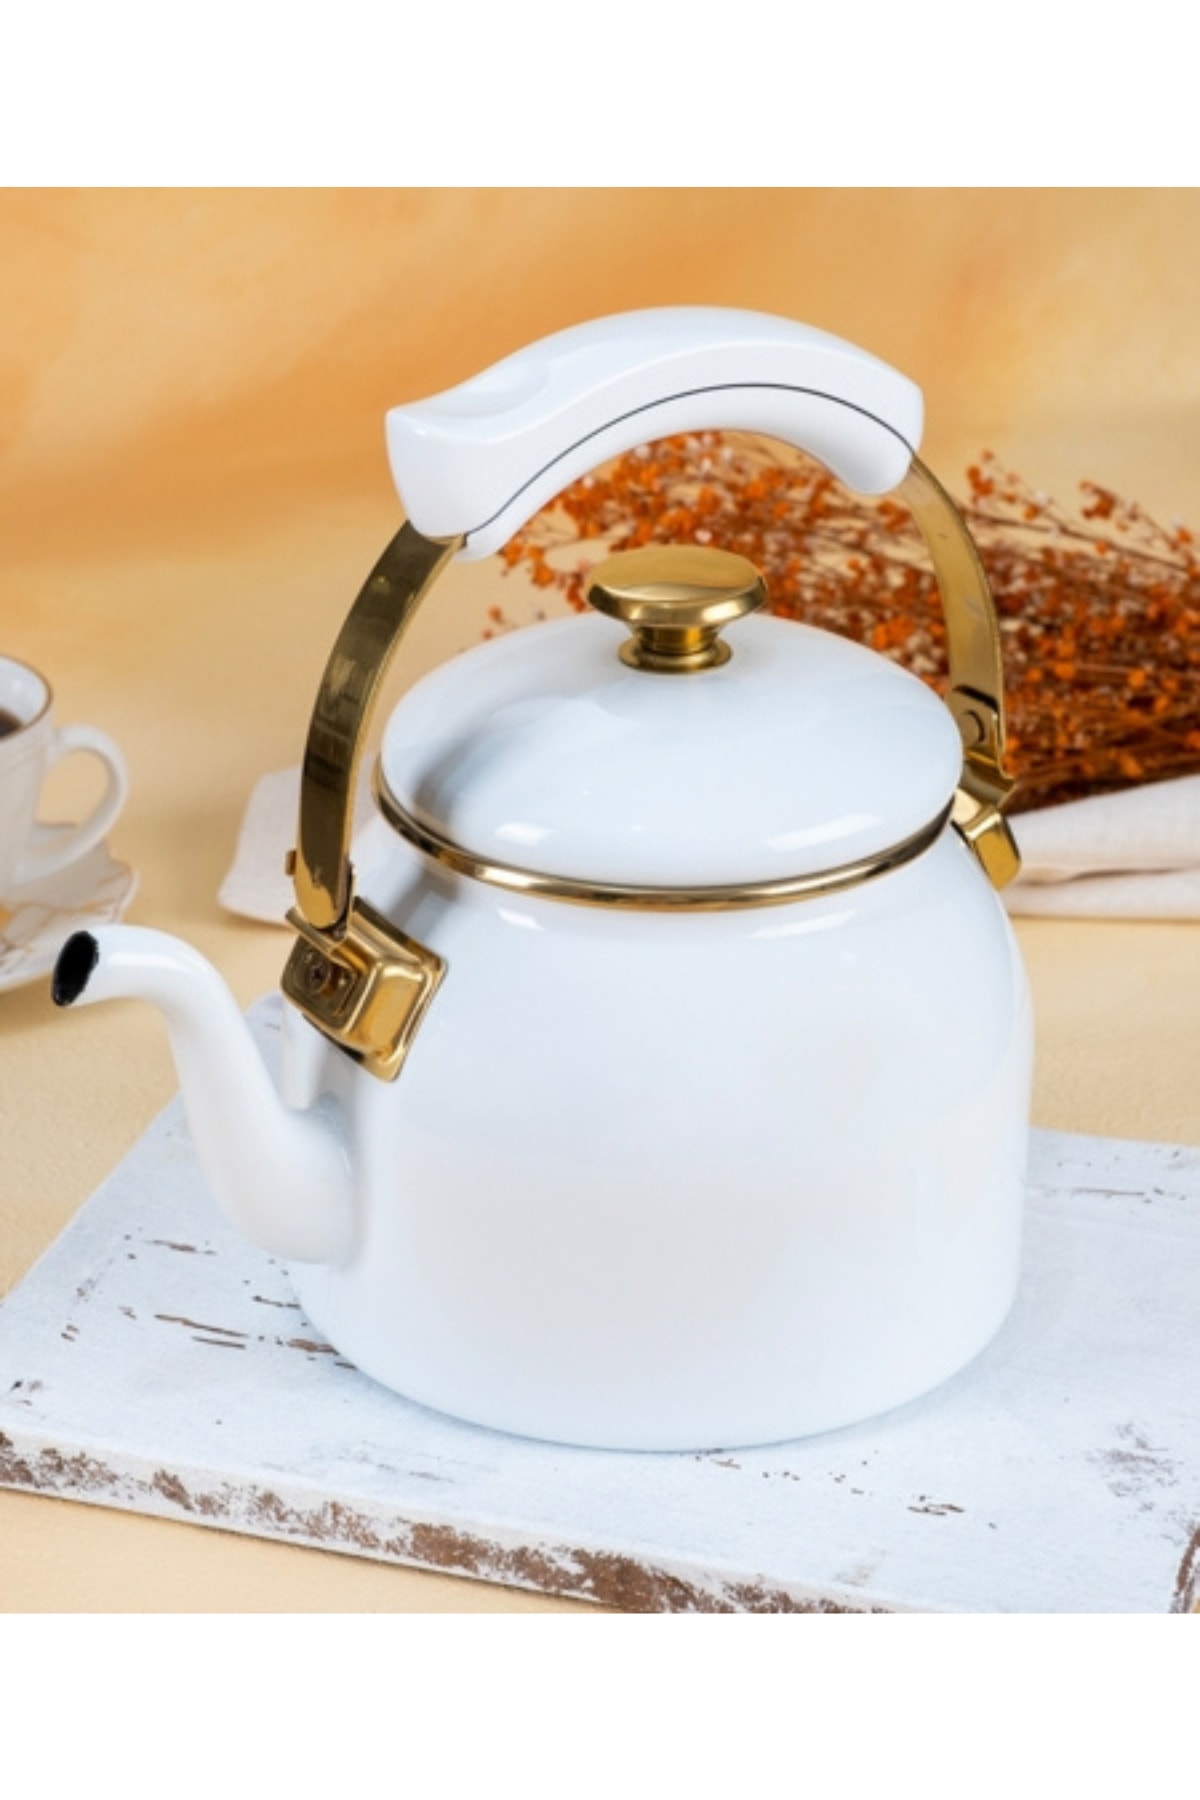 ACAR قابلمه چای گیاهی میناکاری شده Qualita-fit سفید - Xap-22-0360-6